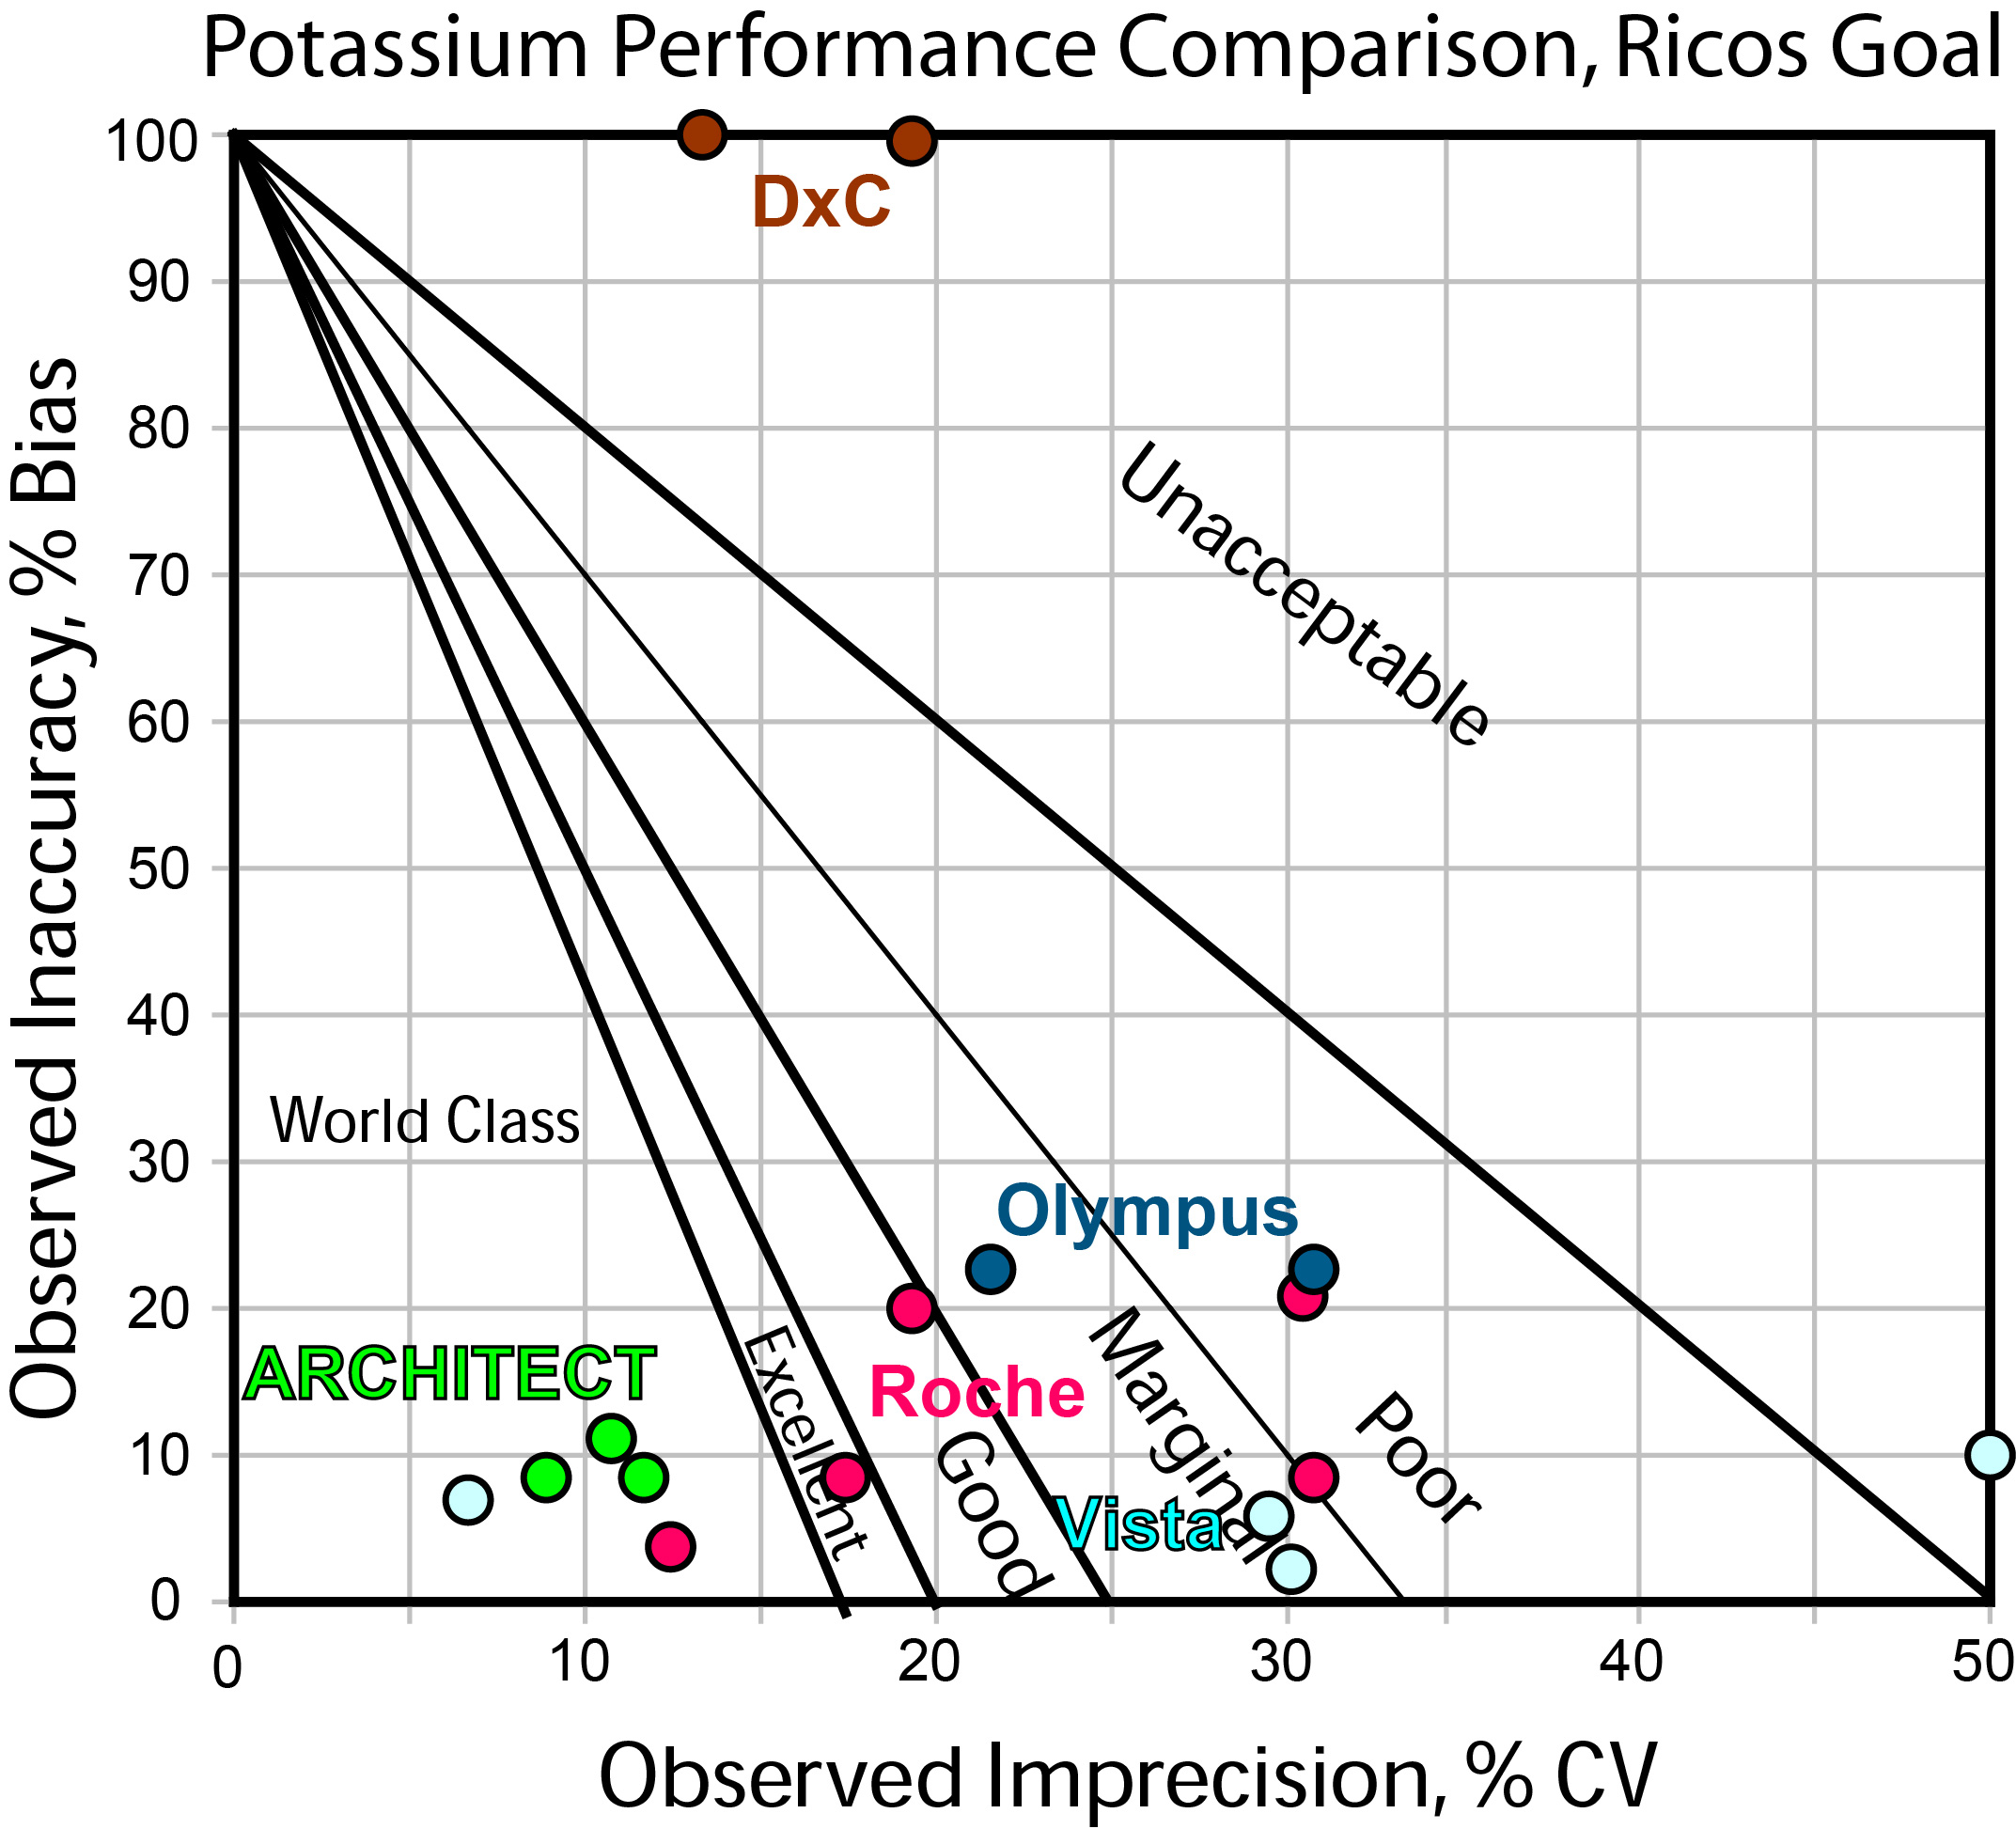 Potassium Comparison - Ricos Goal